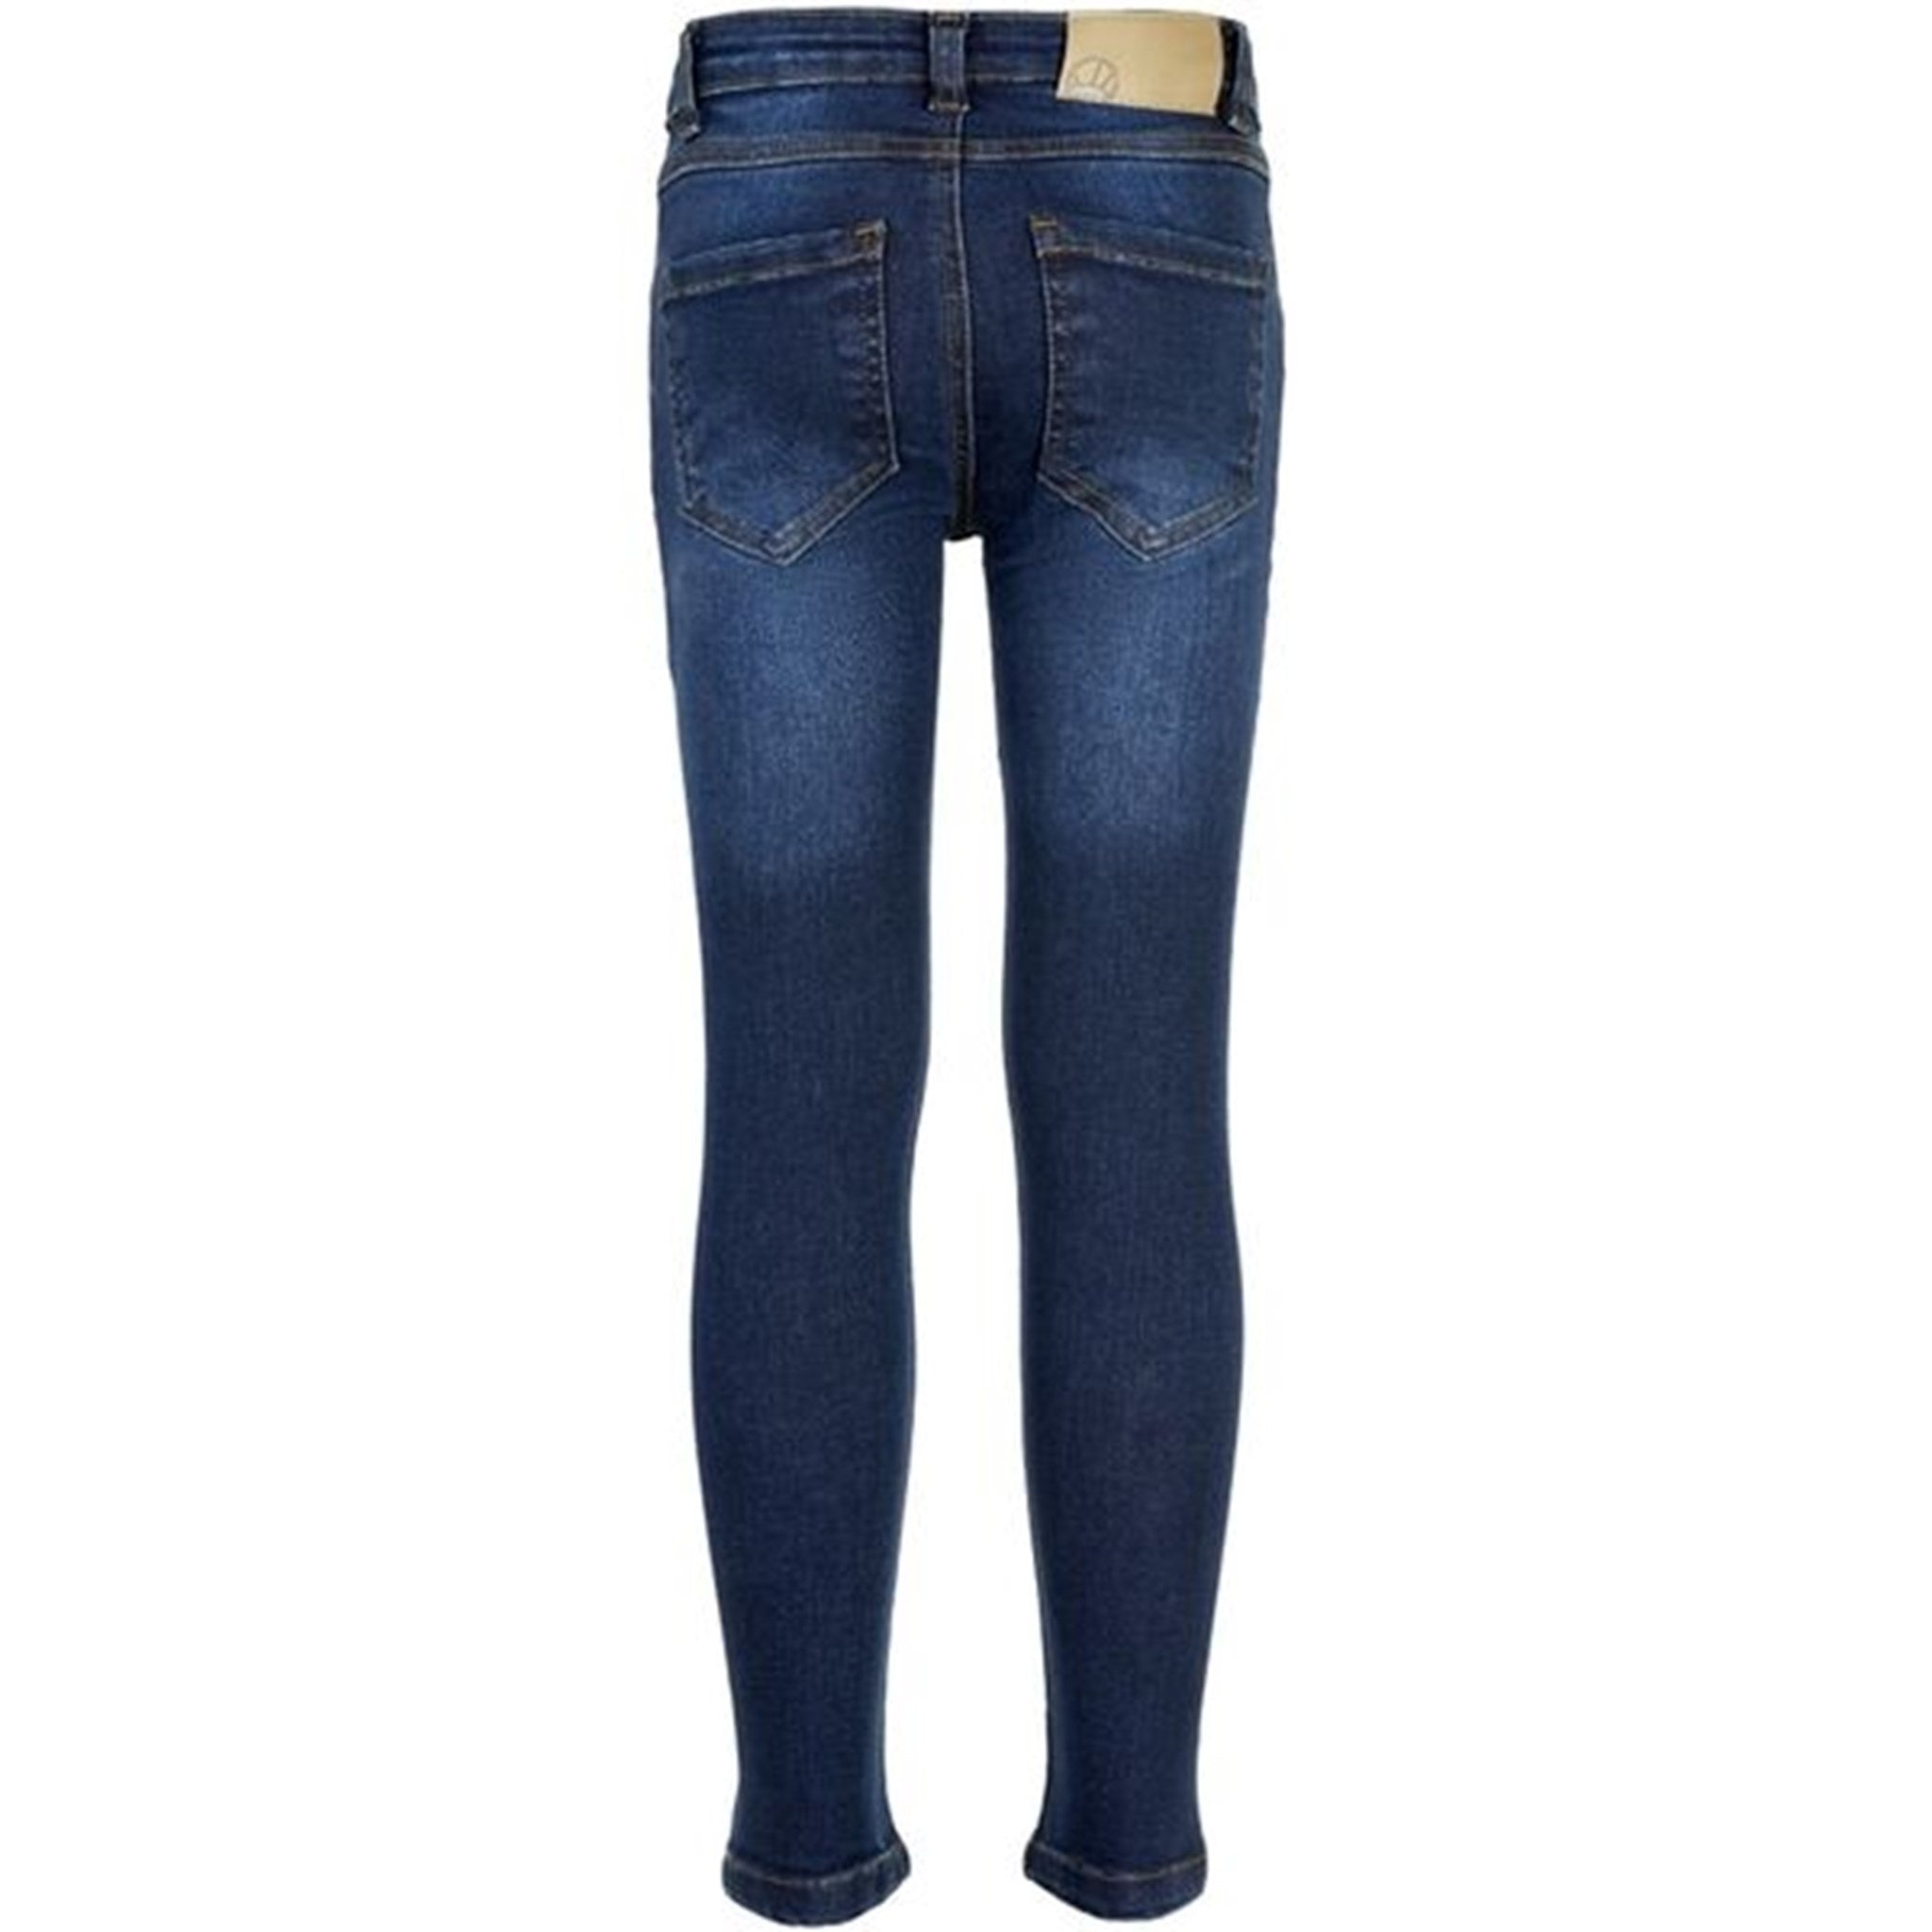 The New Oslo Super Slim Jeans Blue 2